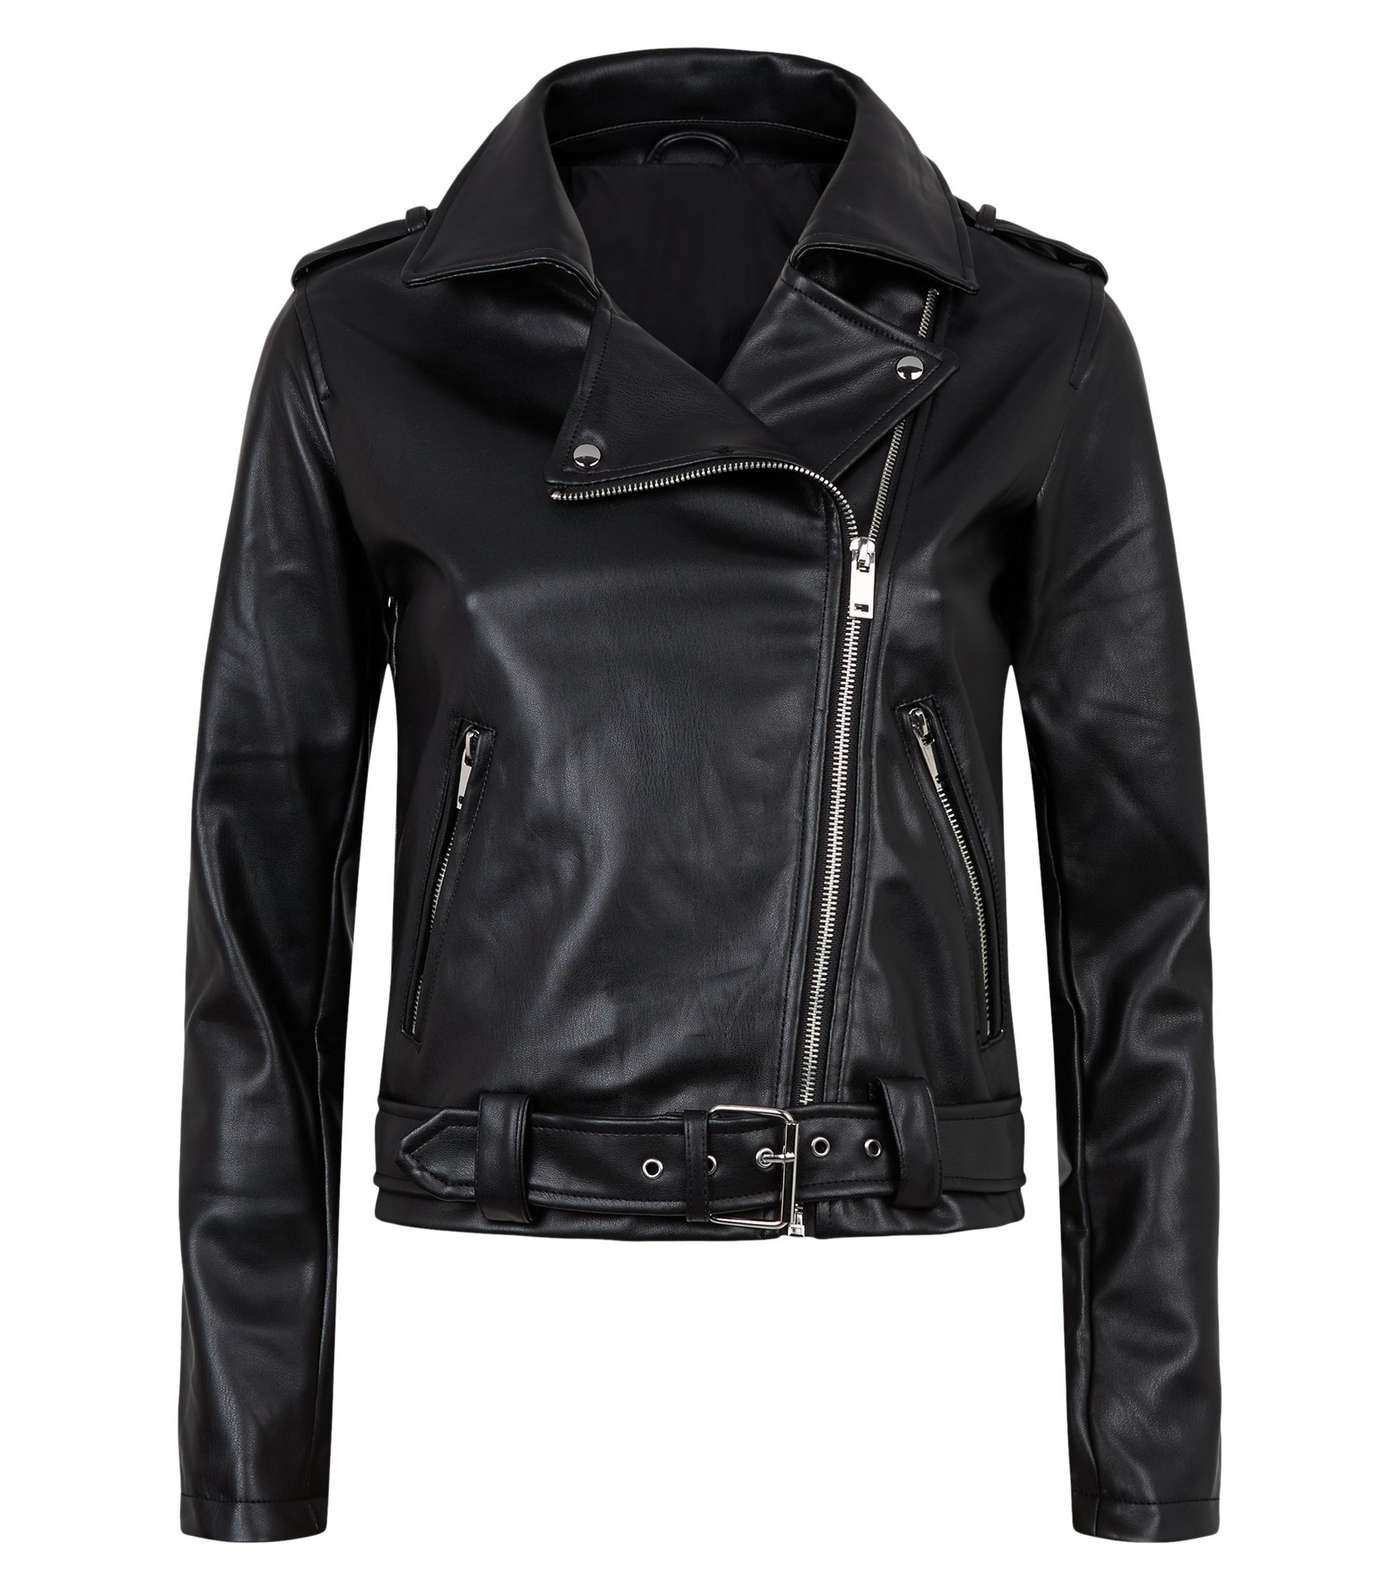 Urban Bliss Black Leather-Look Biker Jacket Image 4